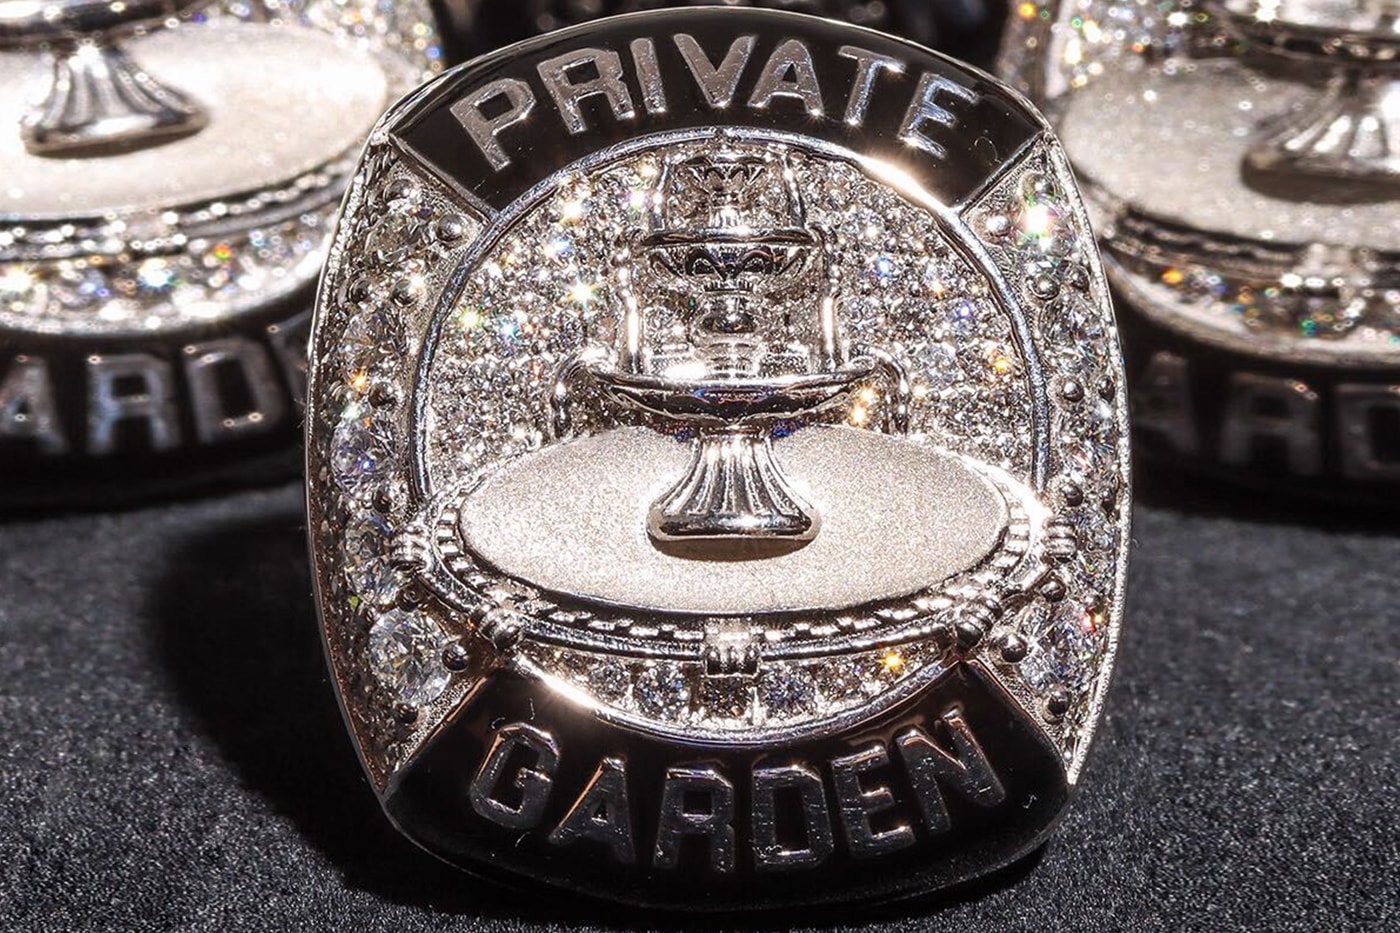 Jack Harlow $110K USD Alex Moss New York Private Garden Championship Rings Diamond Jewelry Price Info 